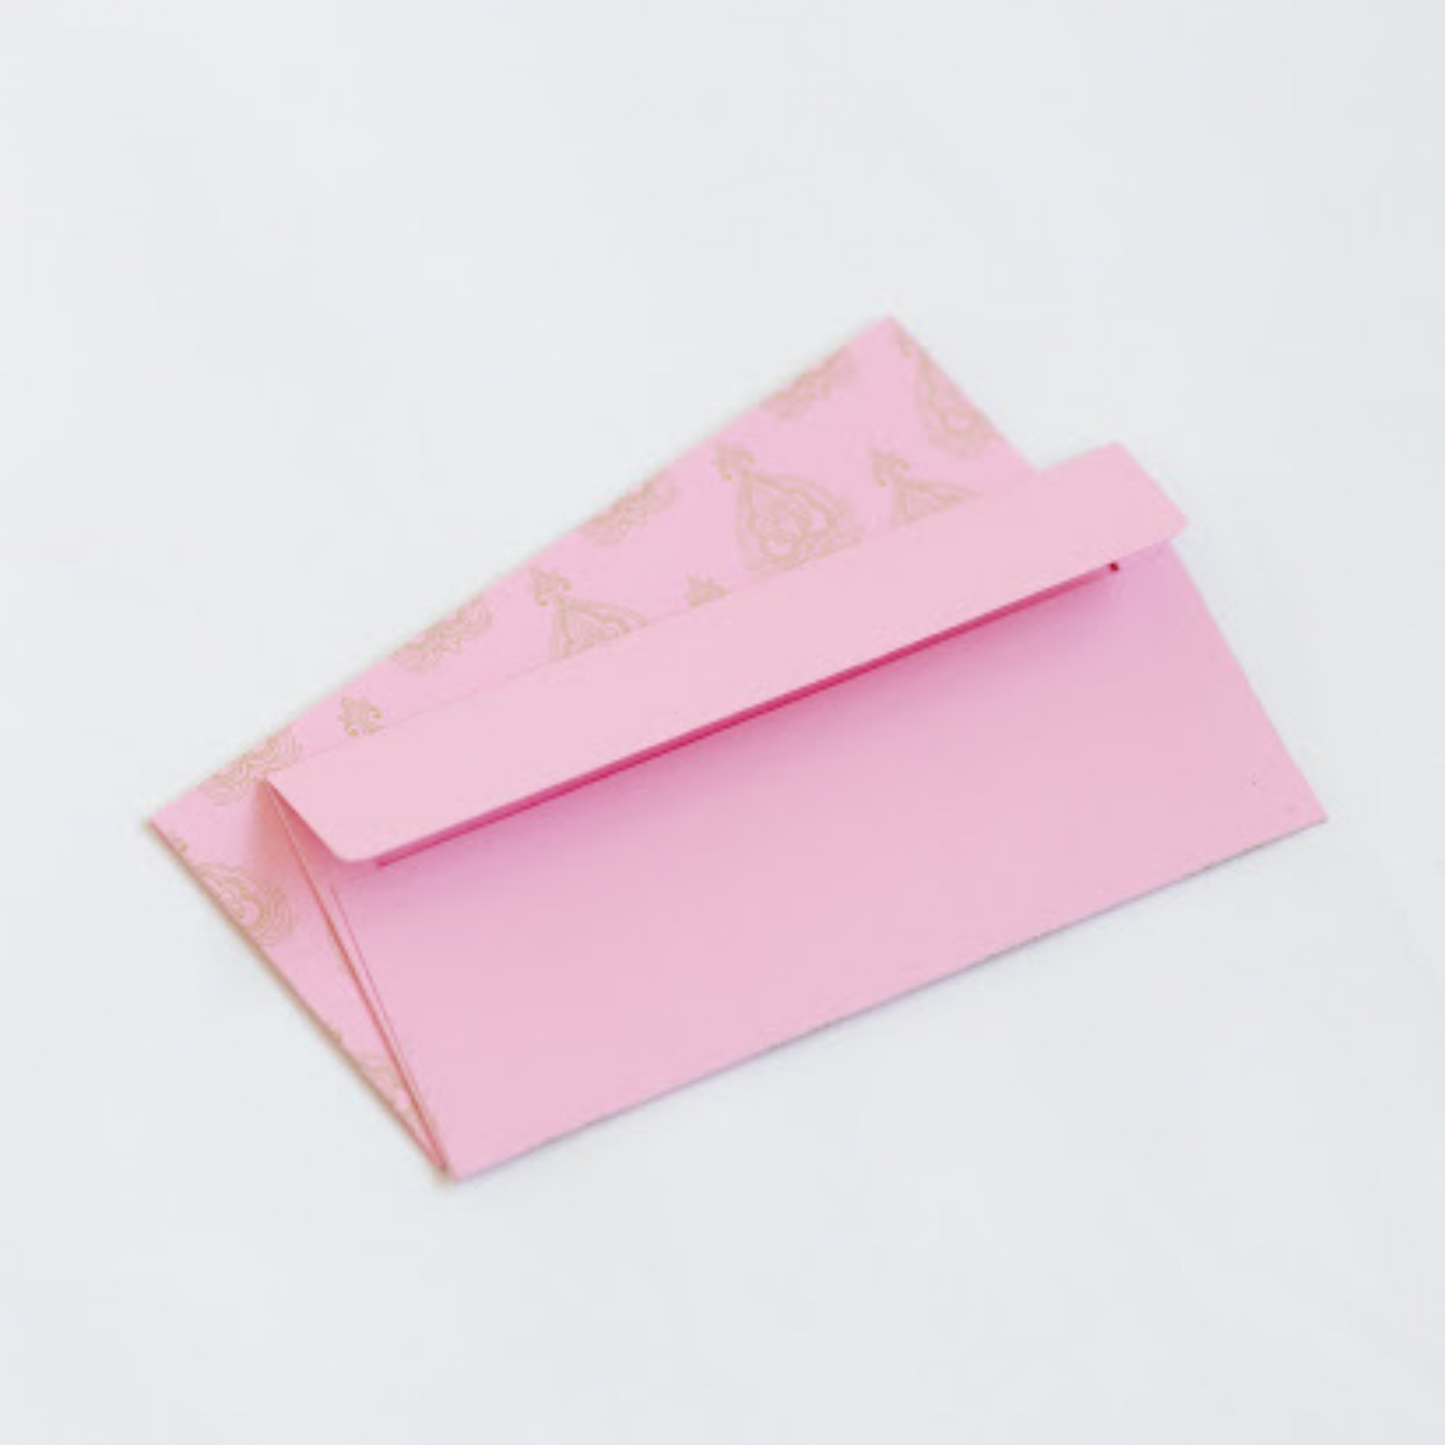 5 Mulghal Leaf Shugun Money Gift Envelopes 7 Colours Available